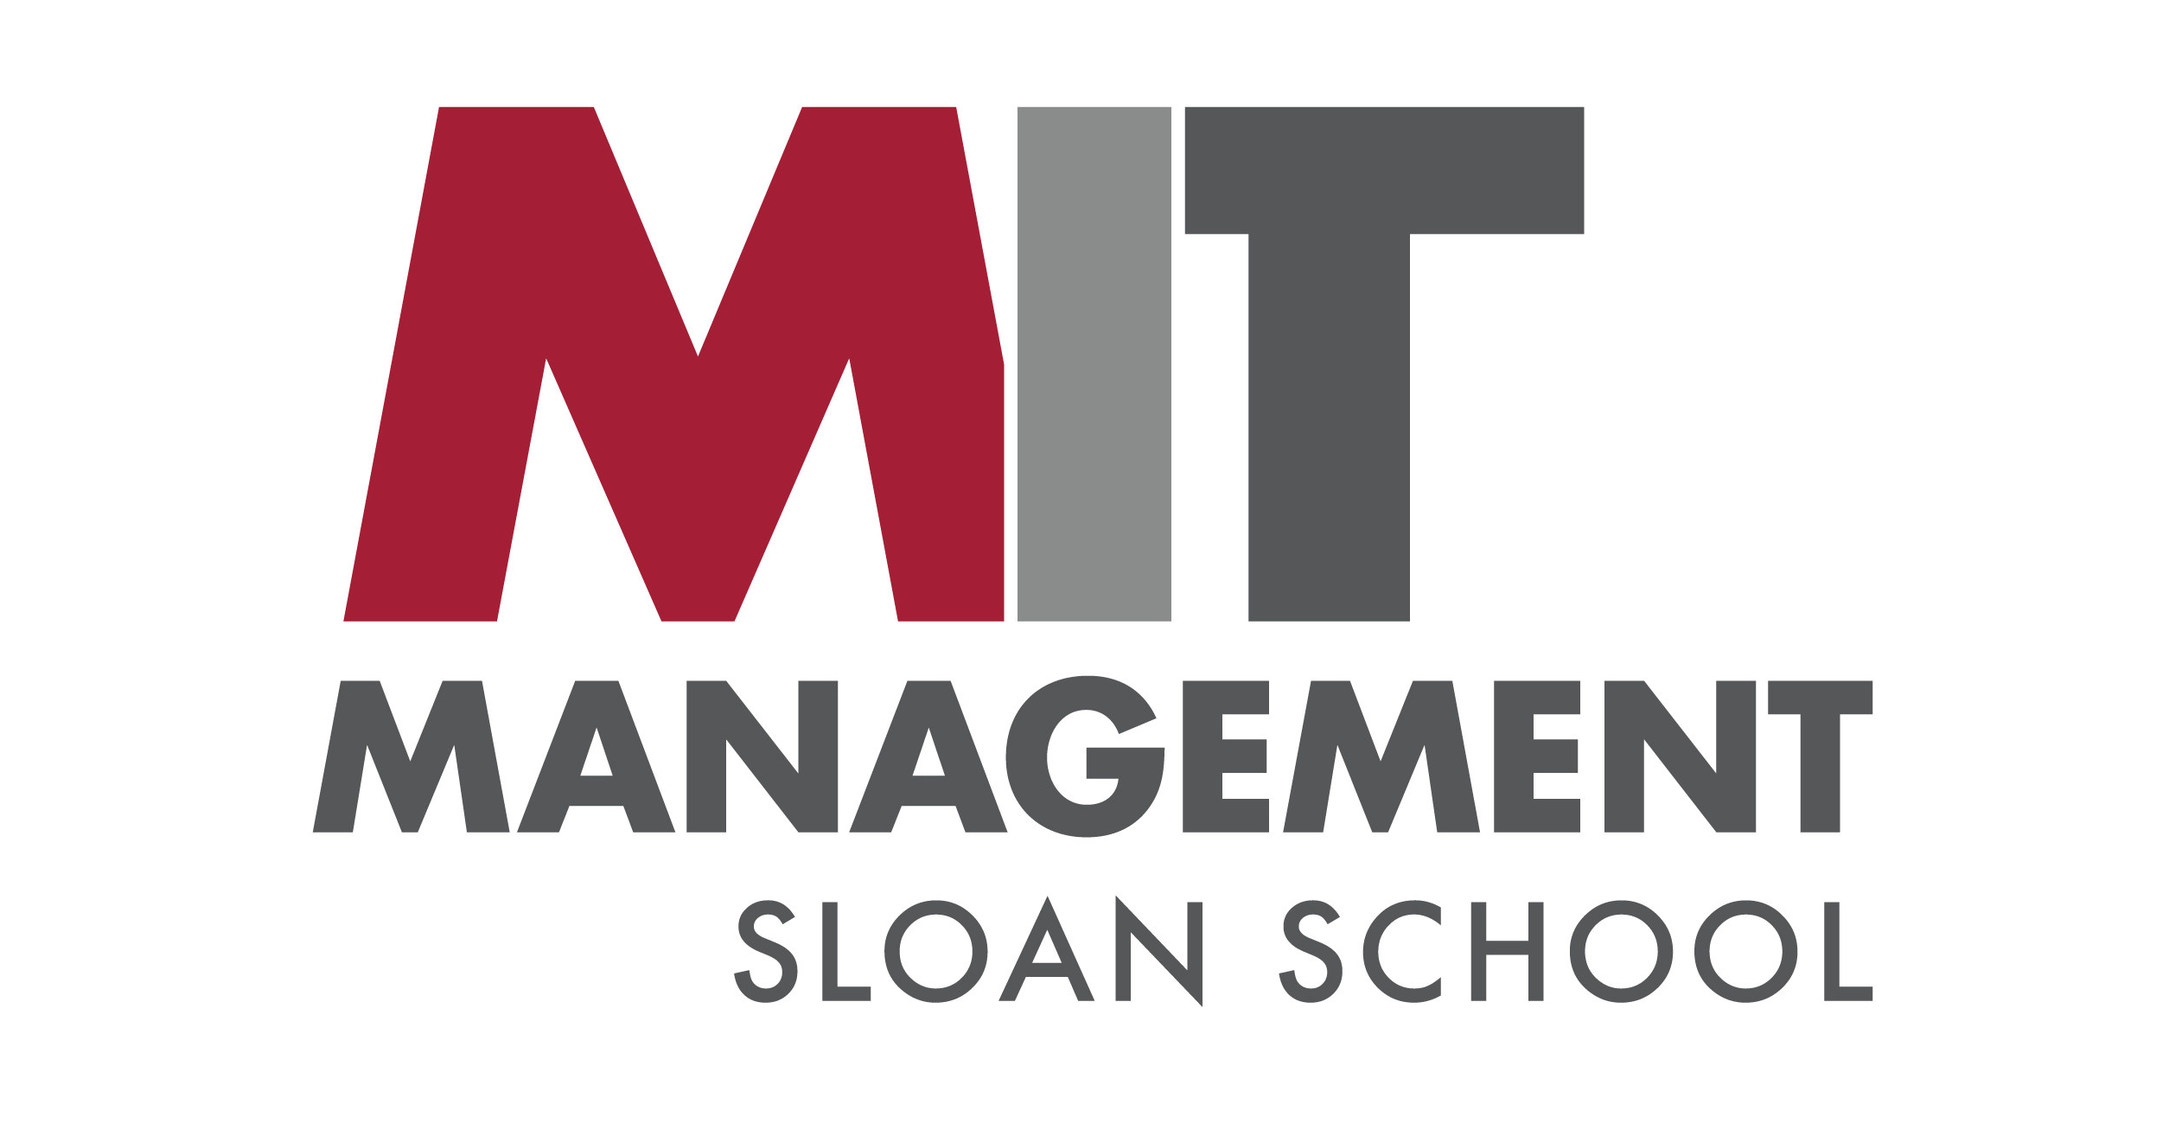 MIT Sloan School of Management announces new Digital Product Management Certificate